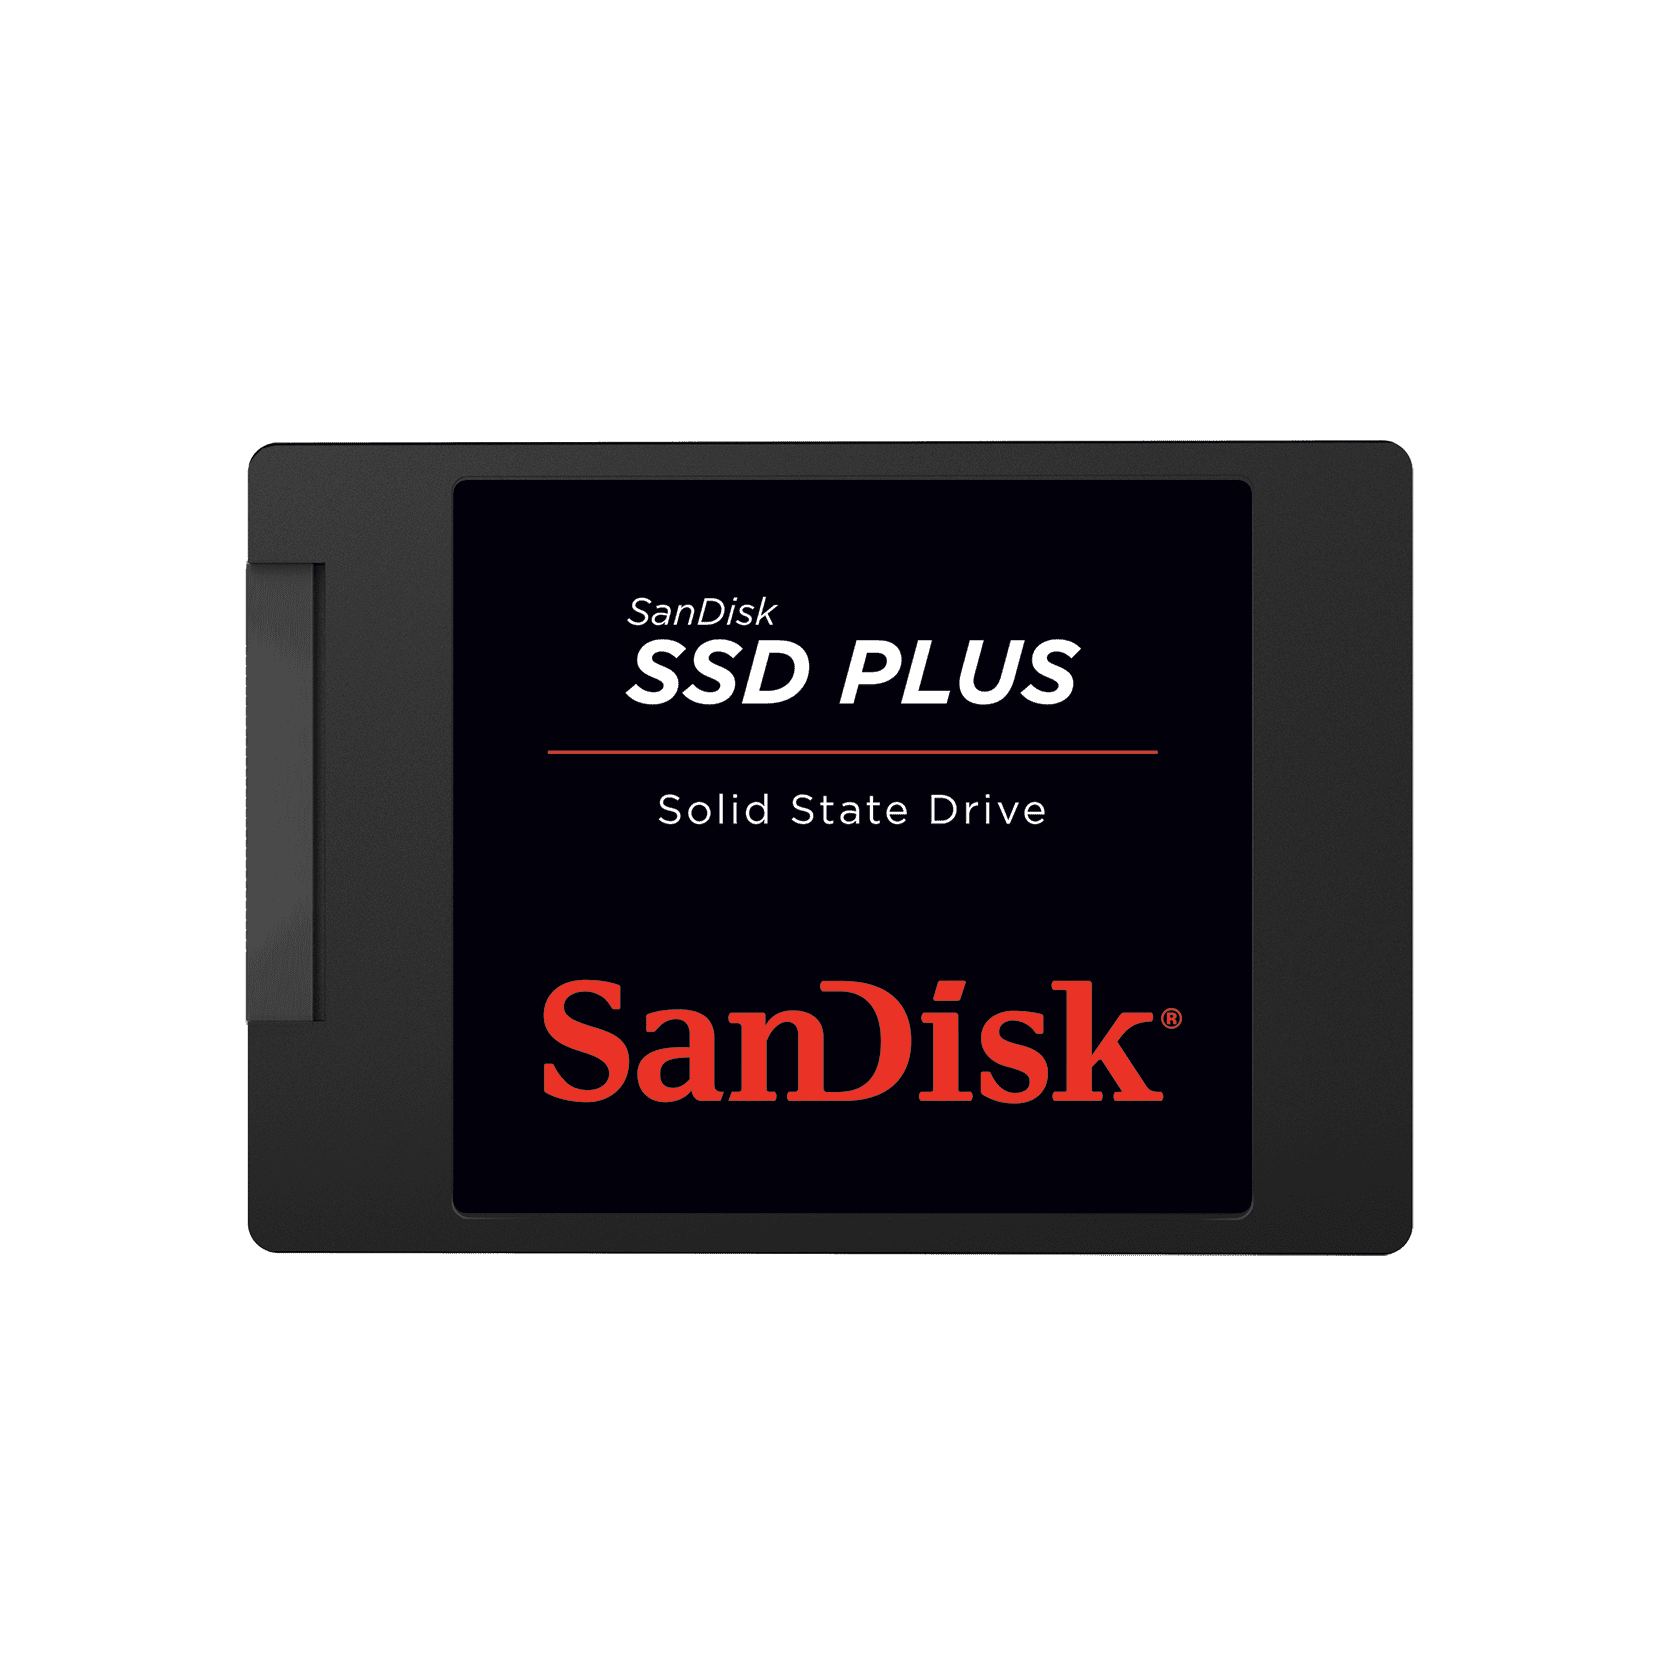 SanDisk SSD Plus - Walmart.com